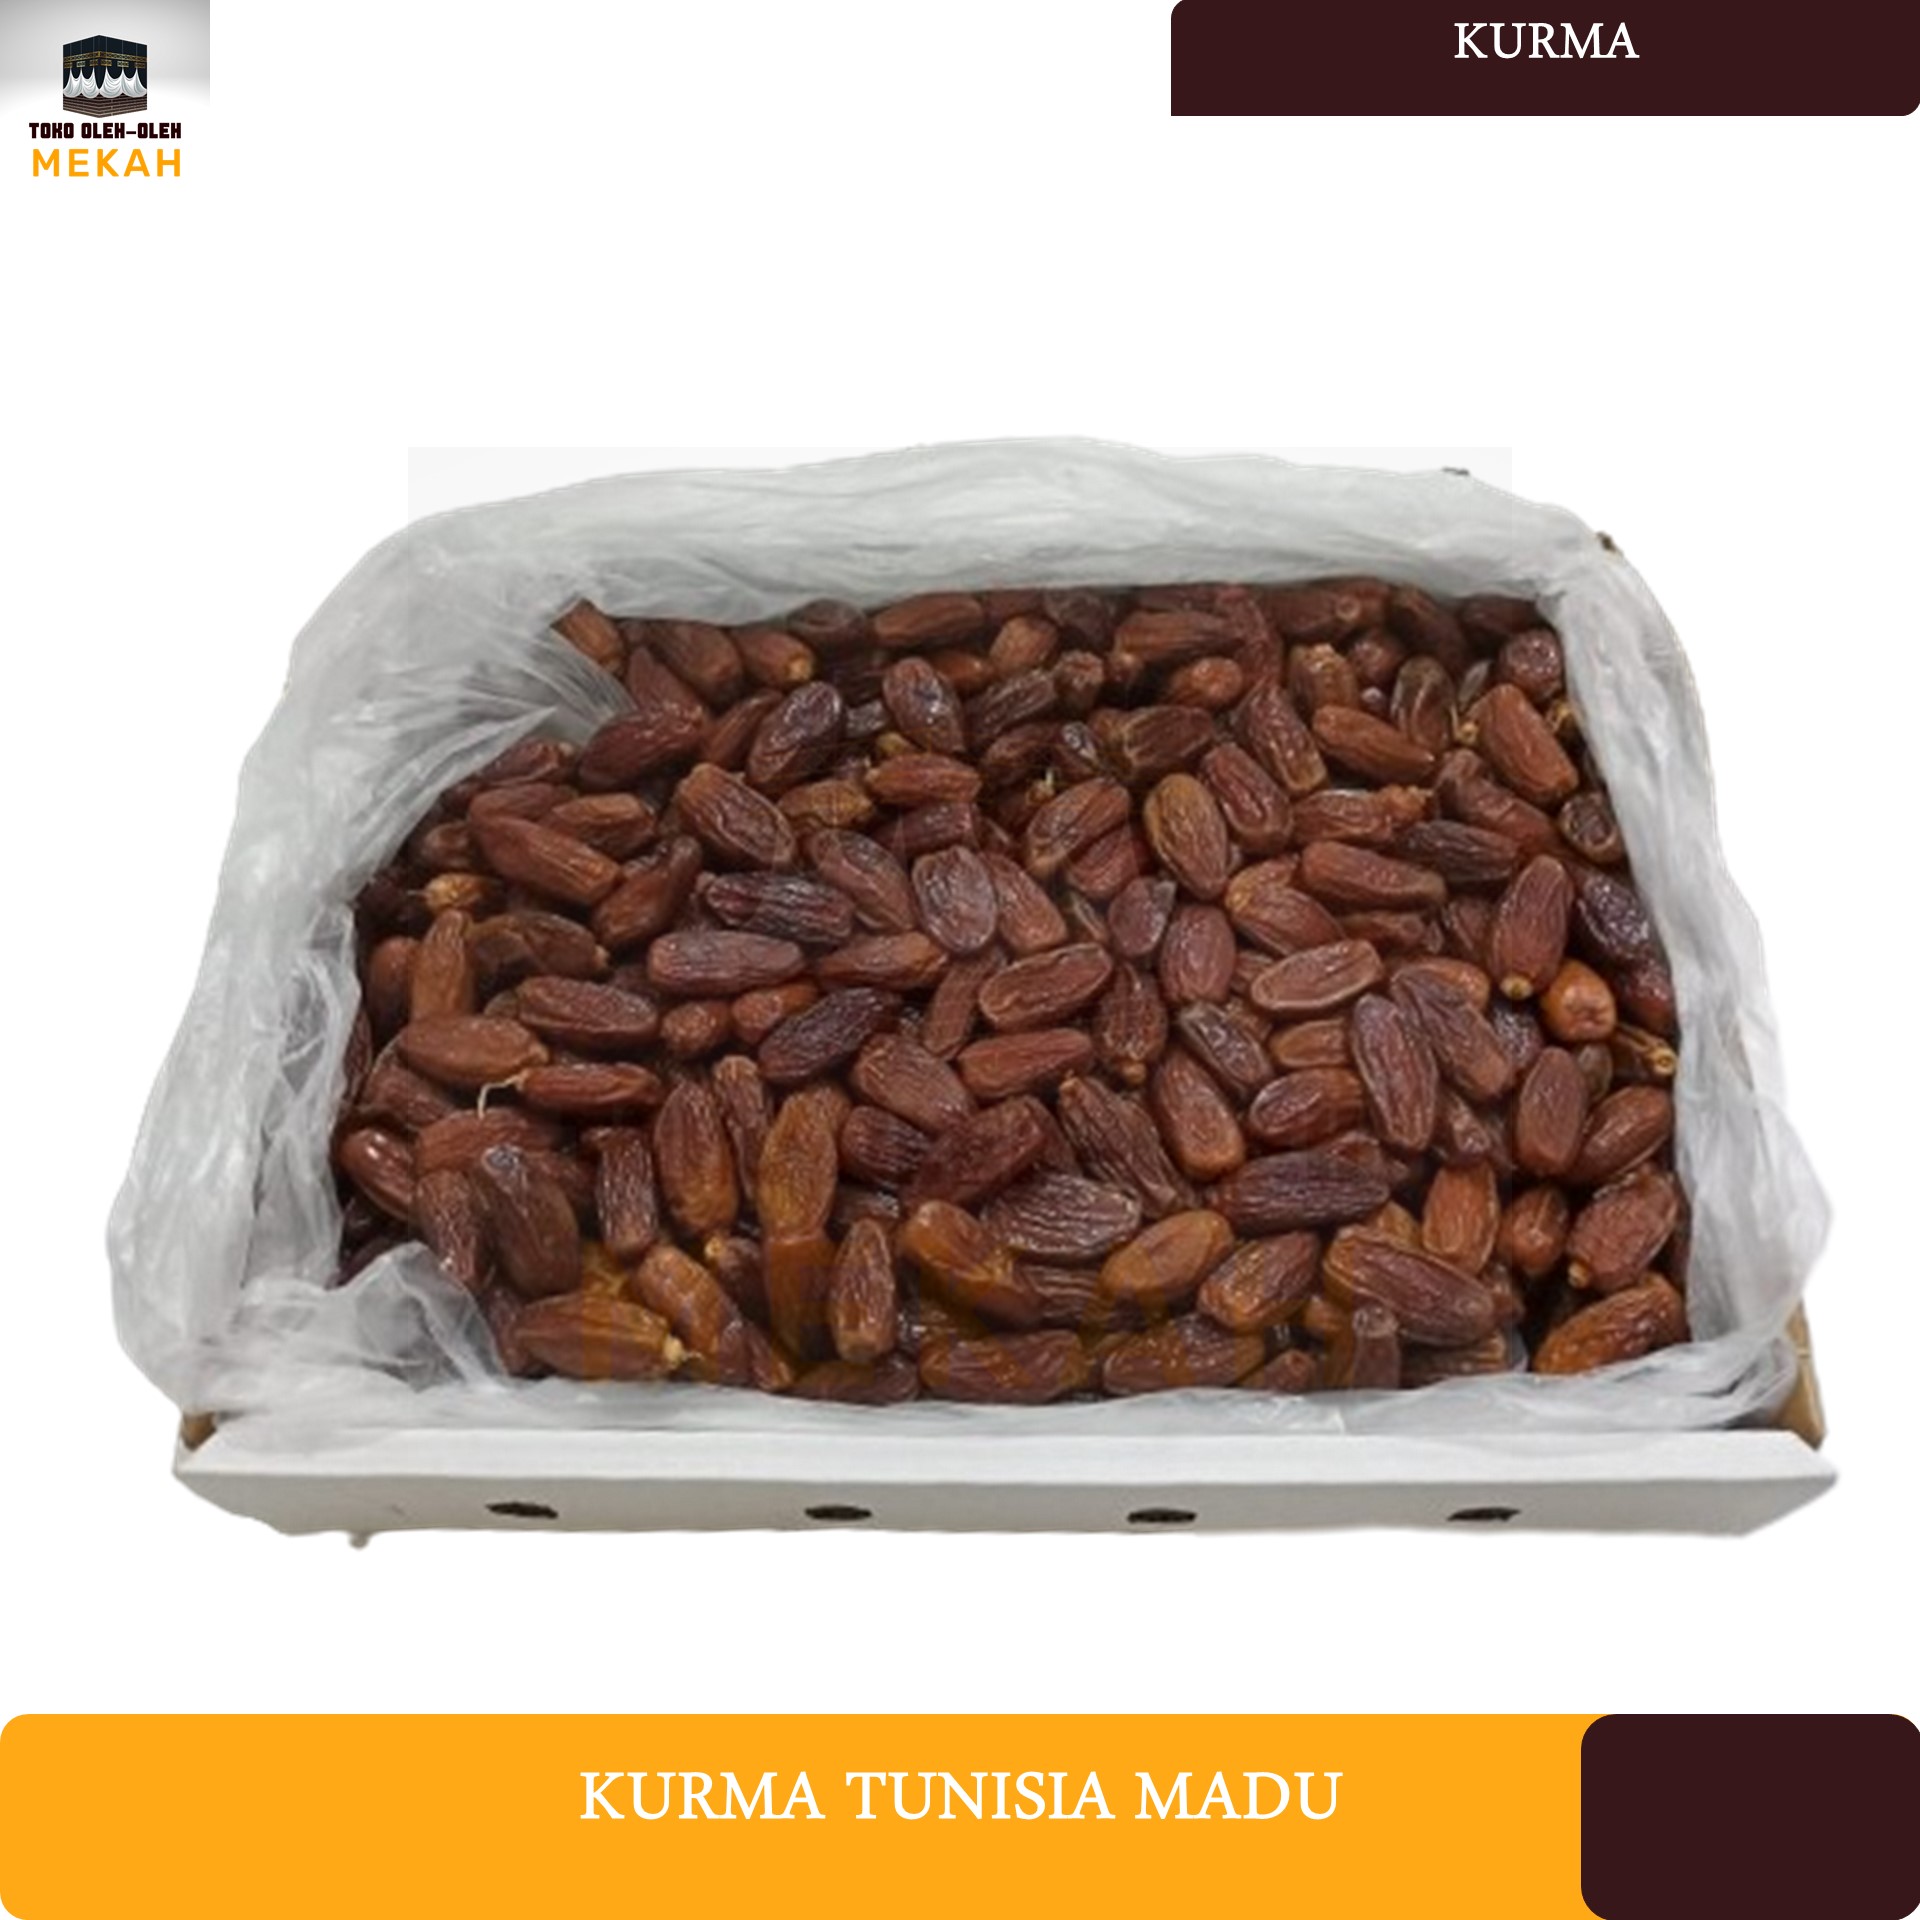 Kurma Tunisia Madu 1 Kg Original Premium